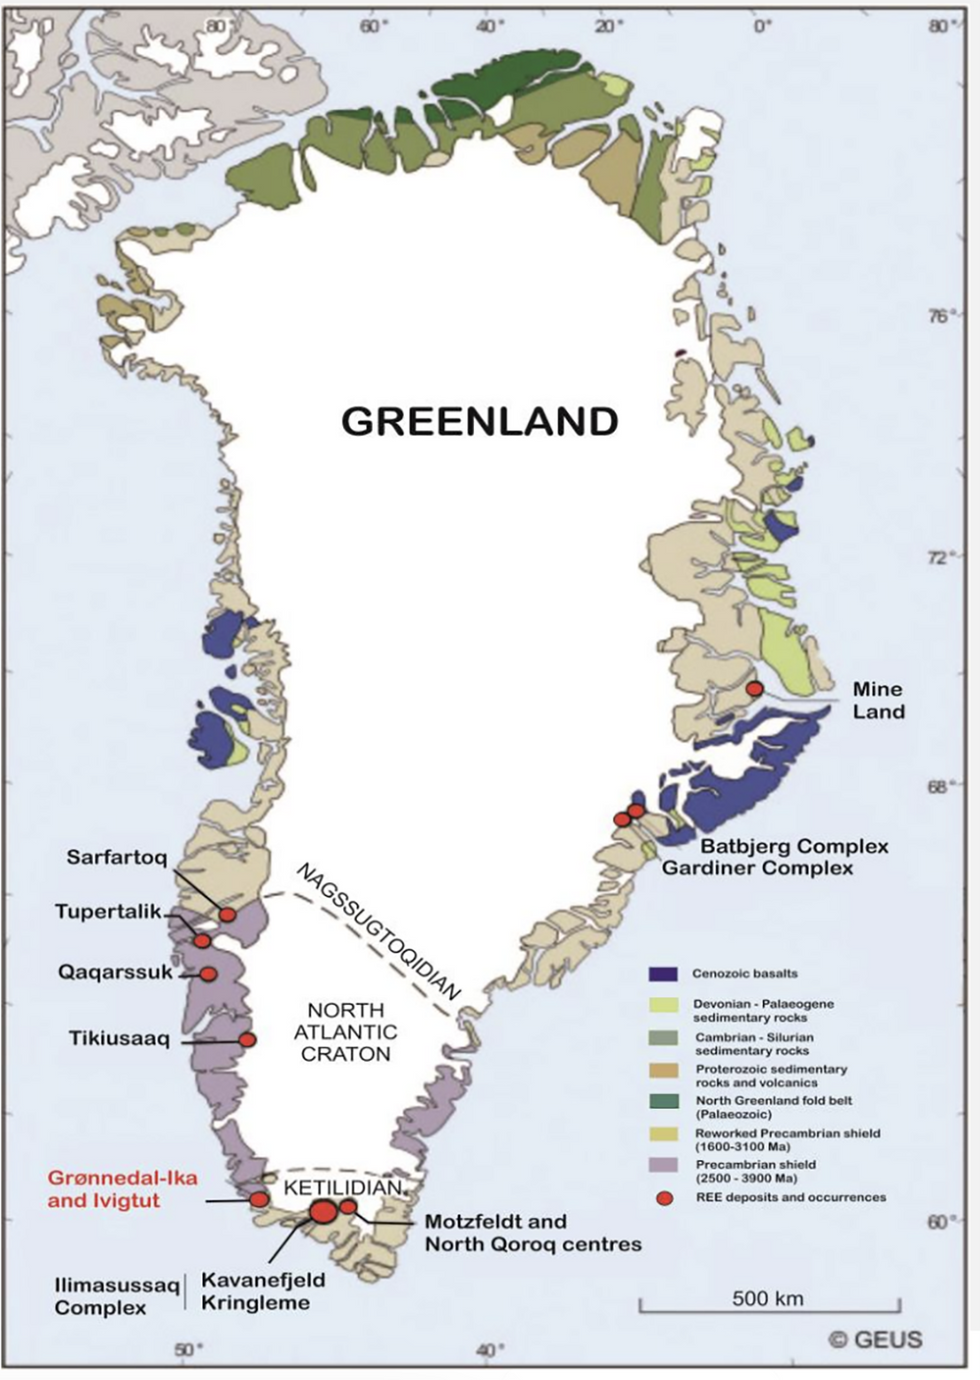 Greenland REE deposits